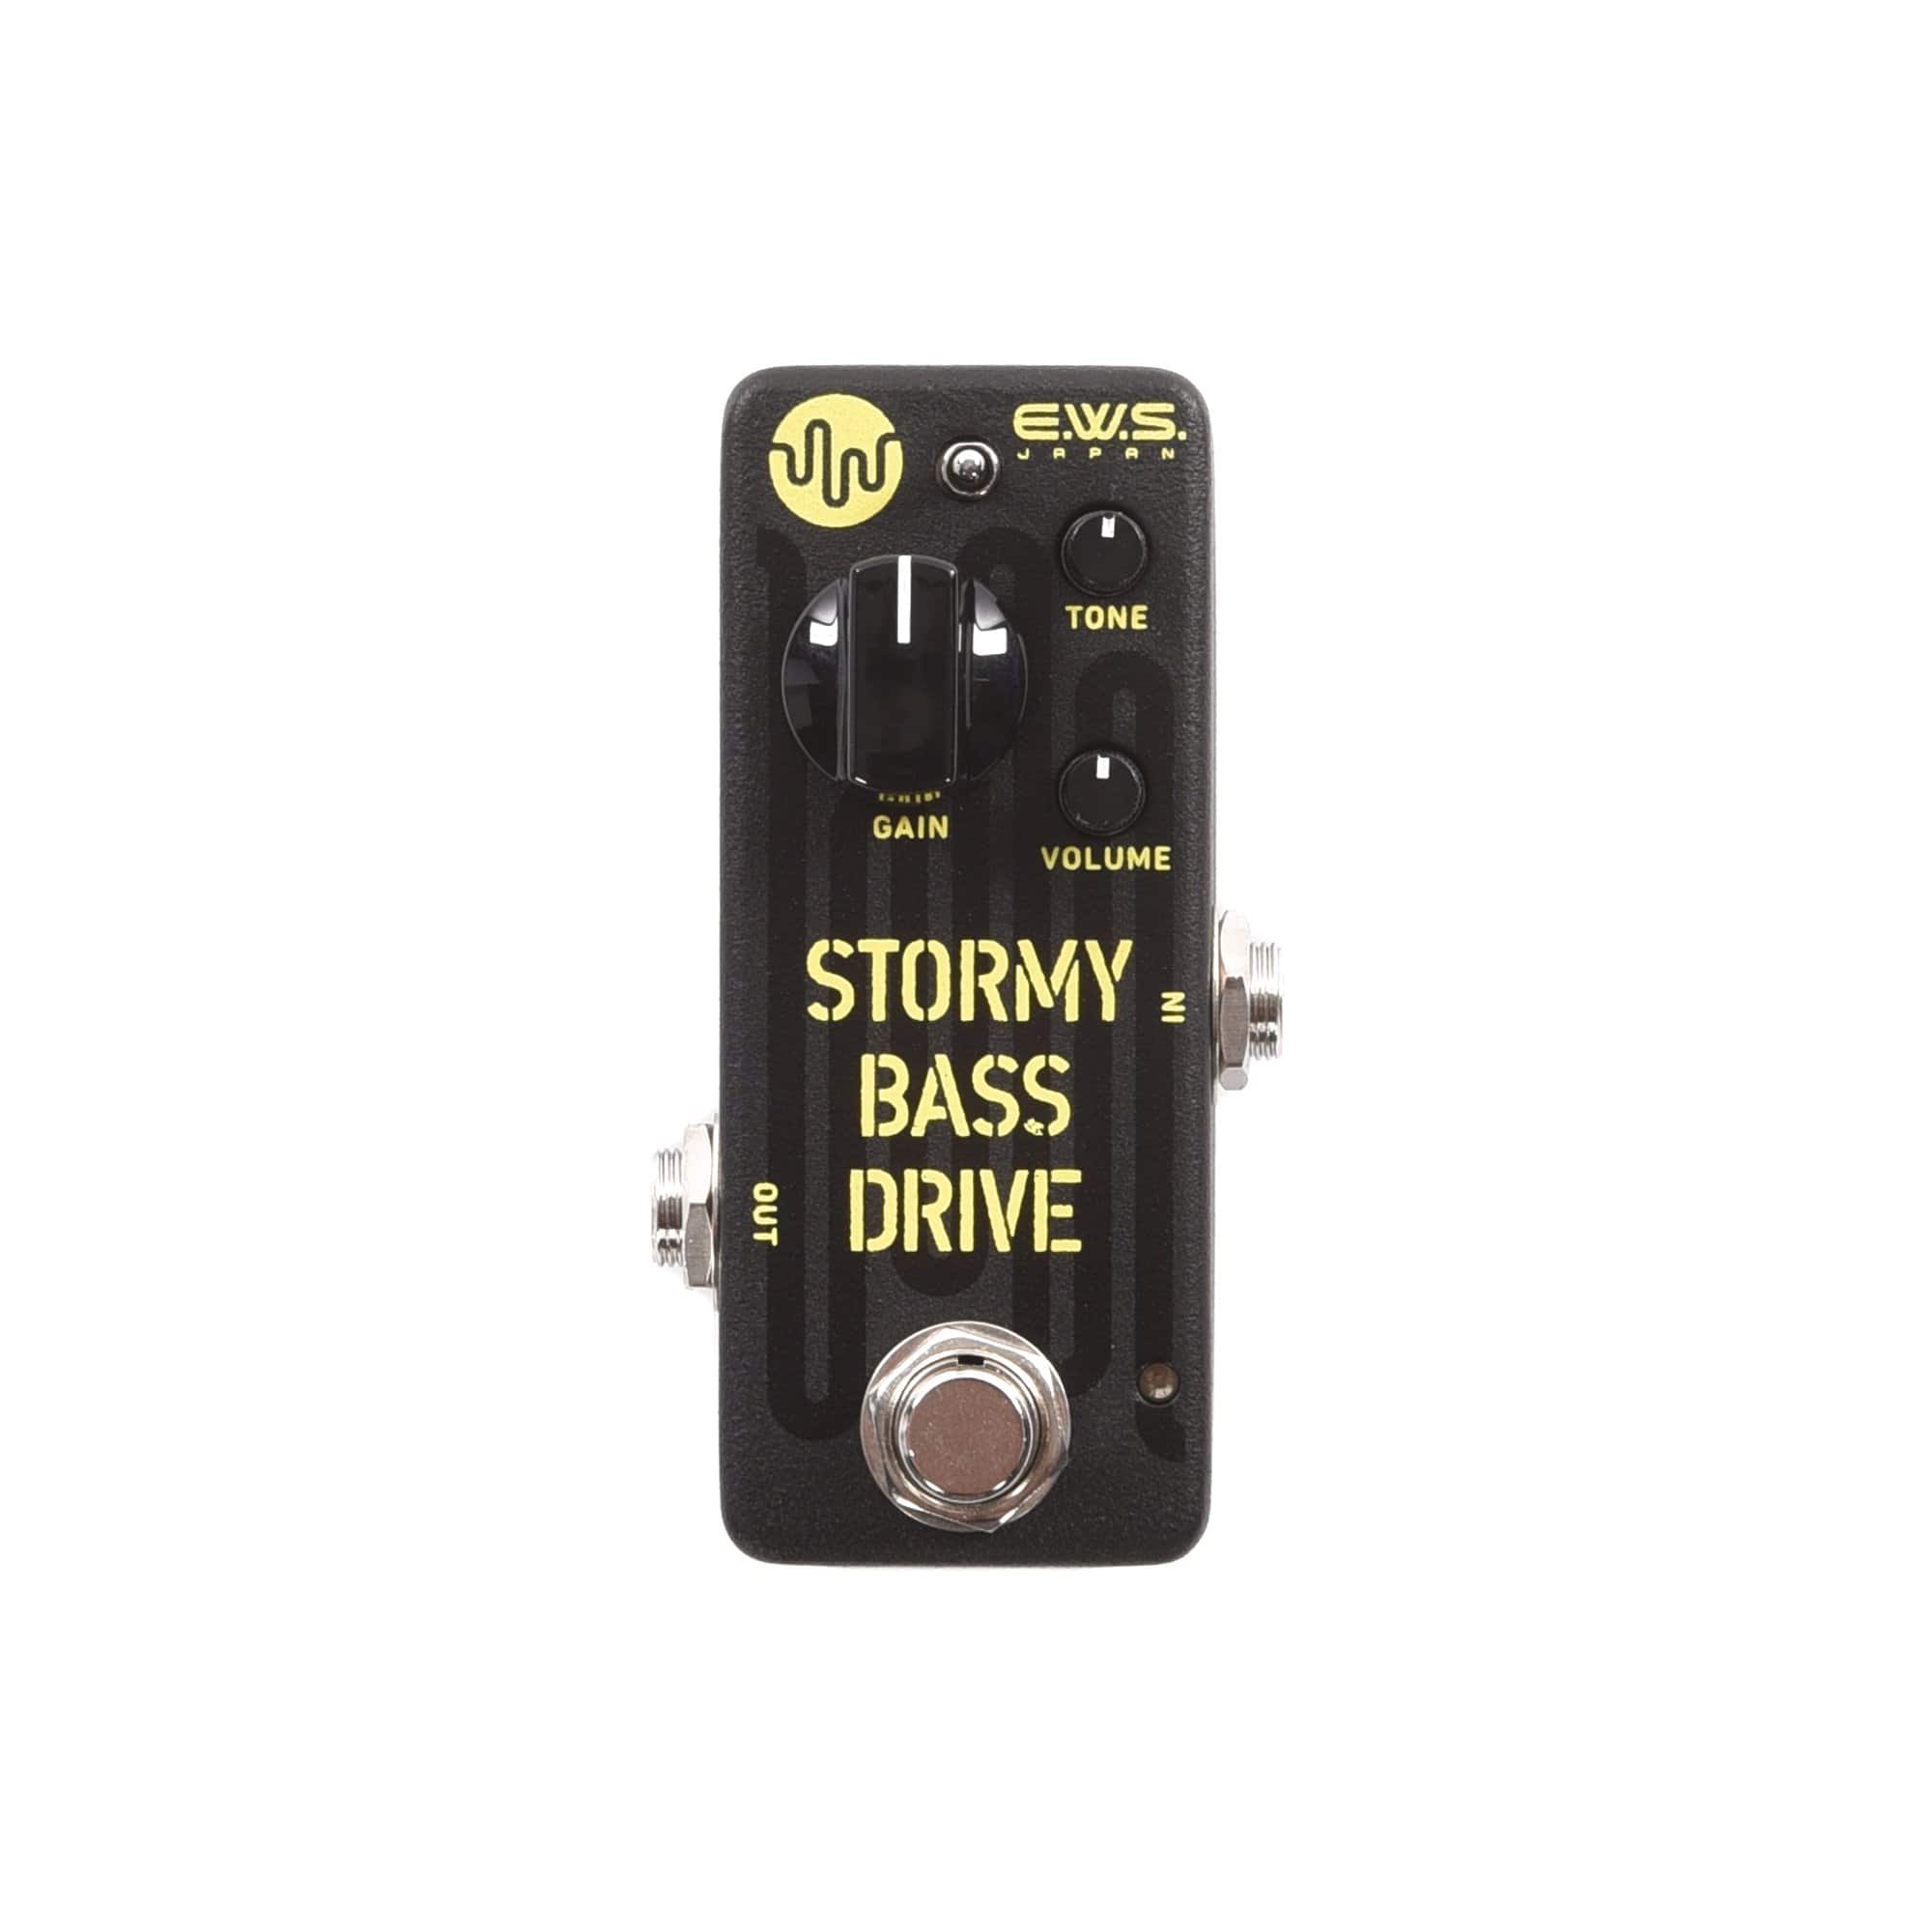 EWS Stormy Bass Drive Overdrive